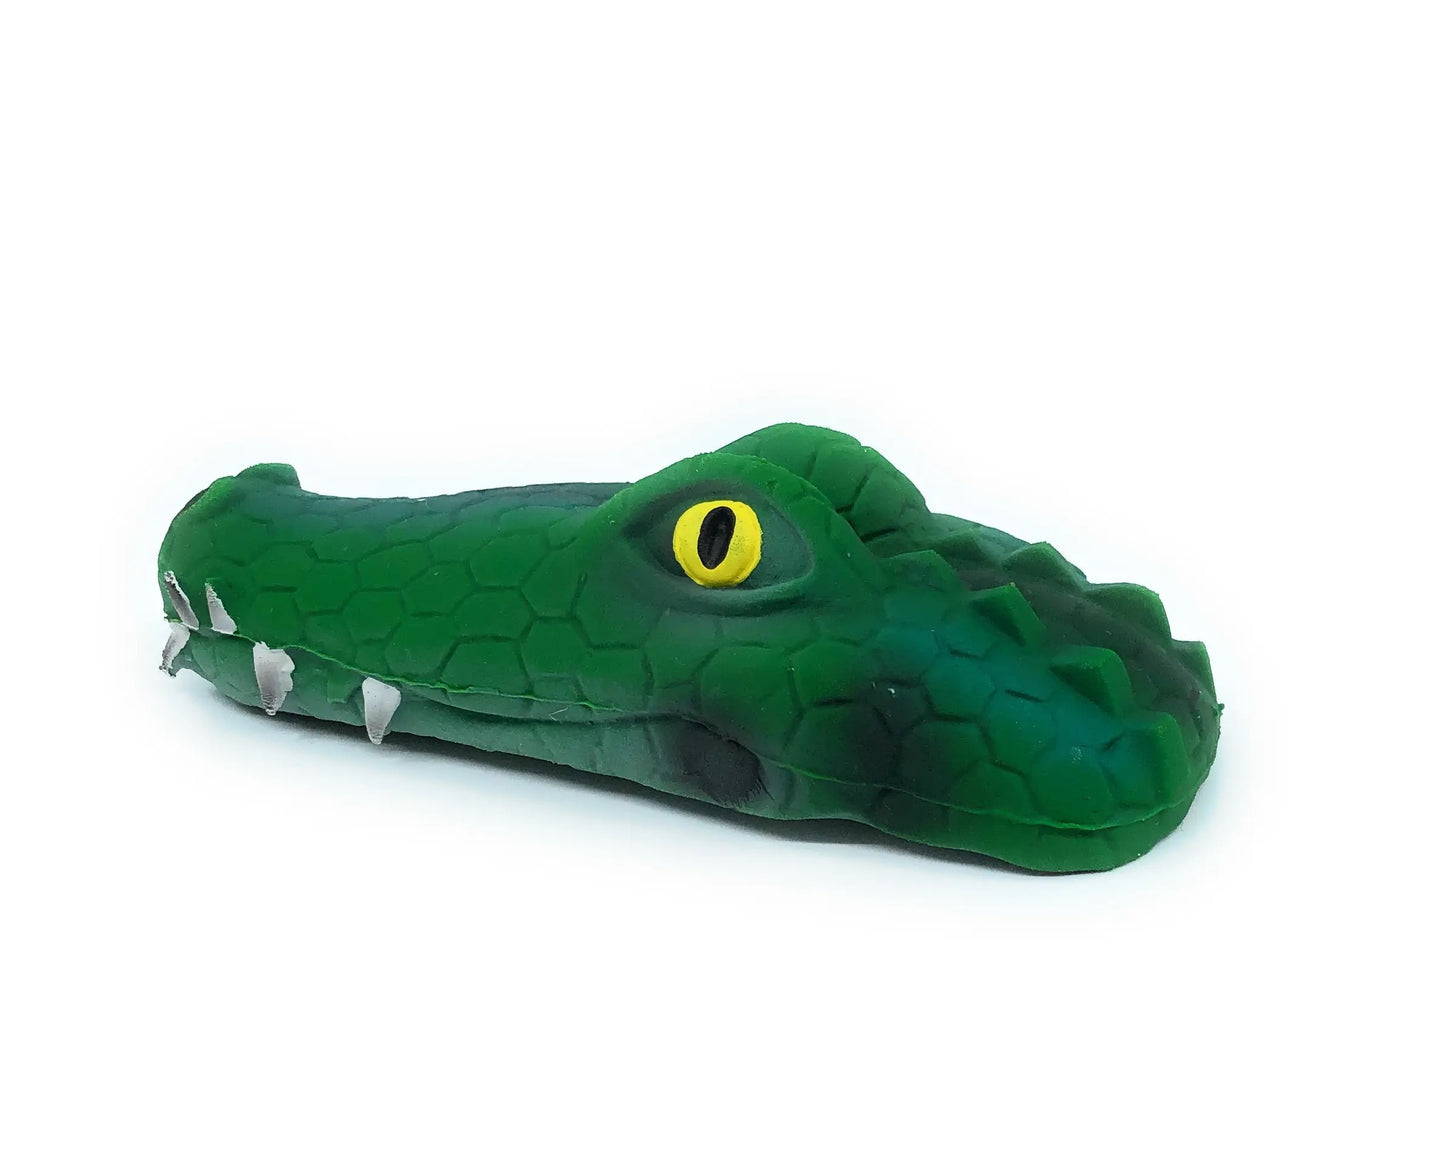 Lanco-Toys - Small Squeaky Alligator